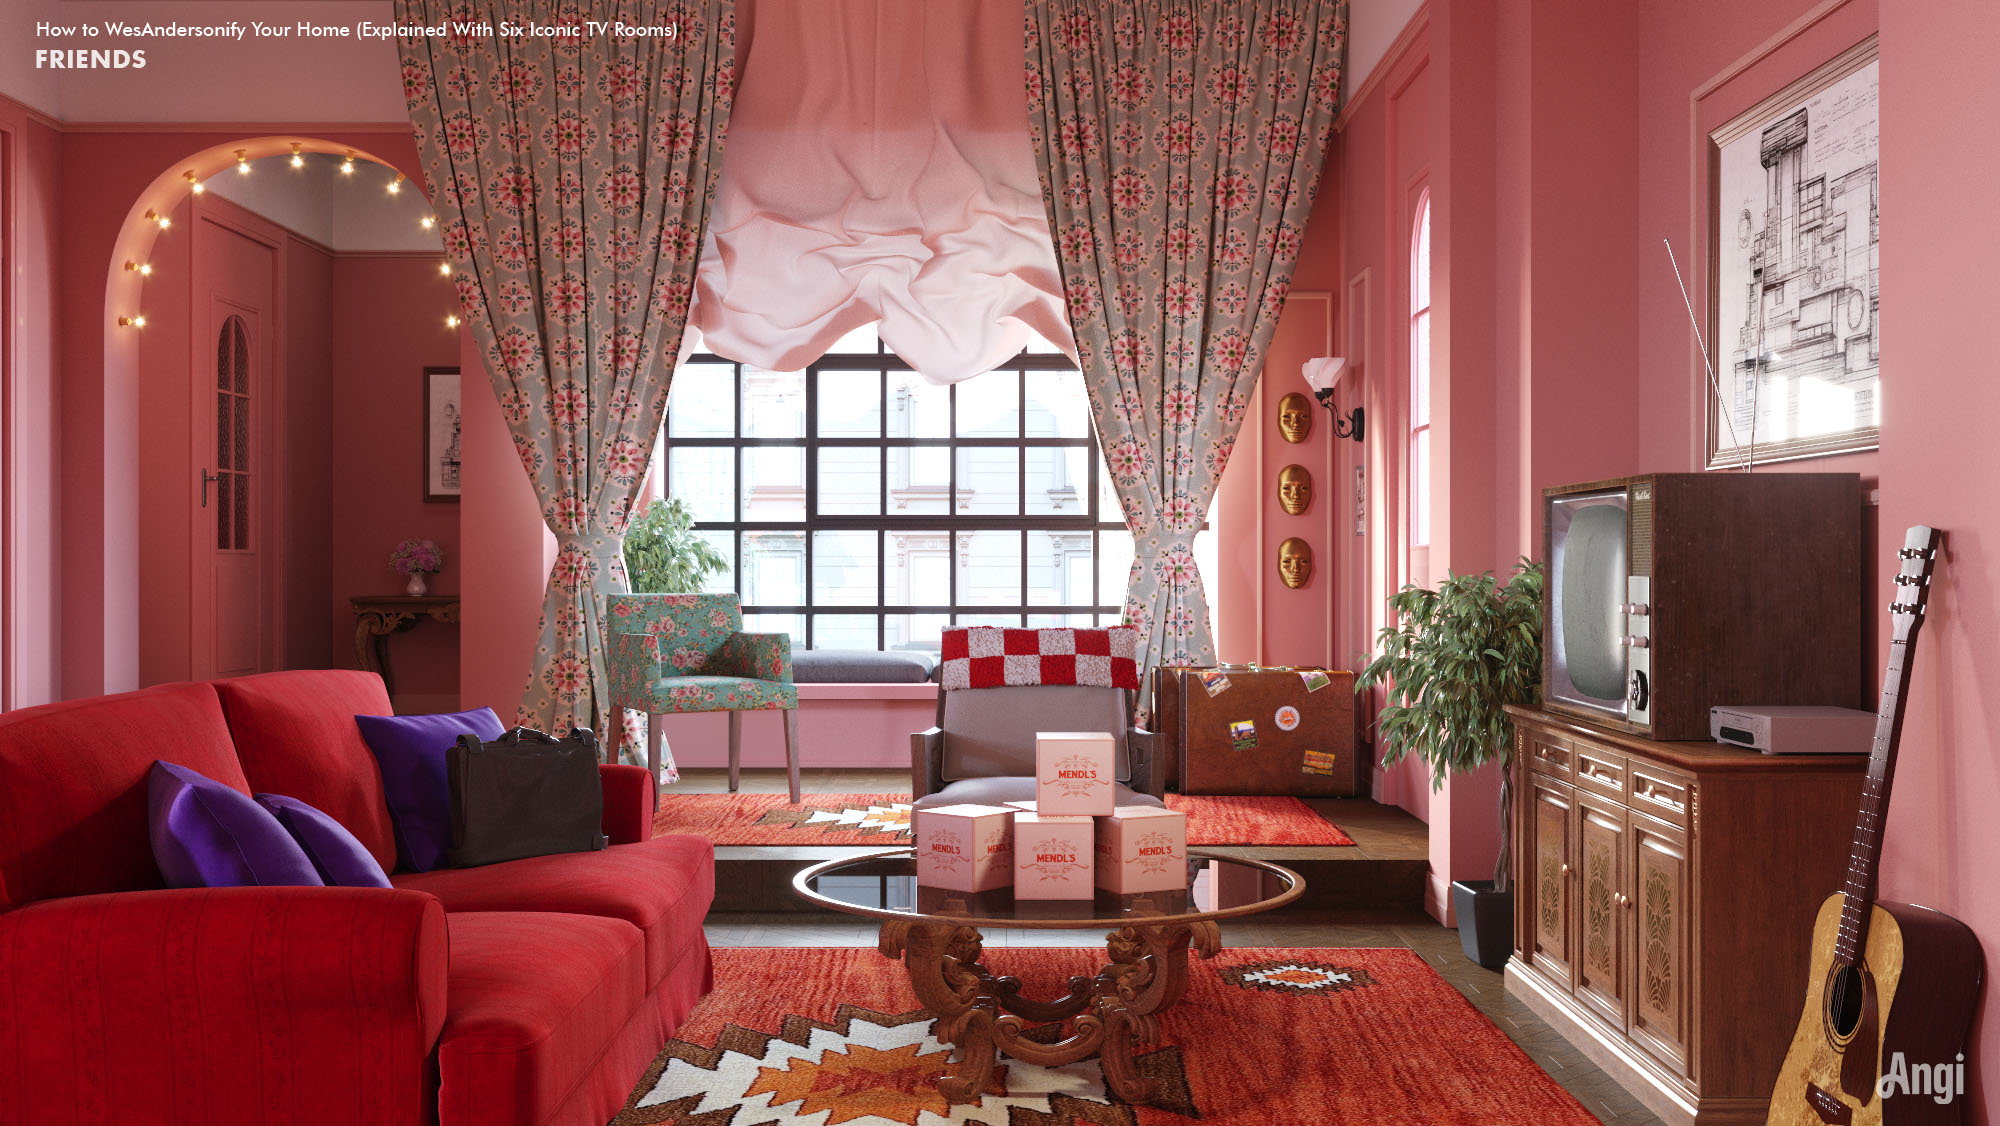 Monica Geller's living room from the hit sitcom 